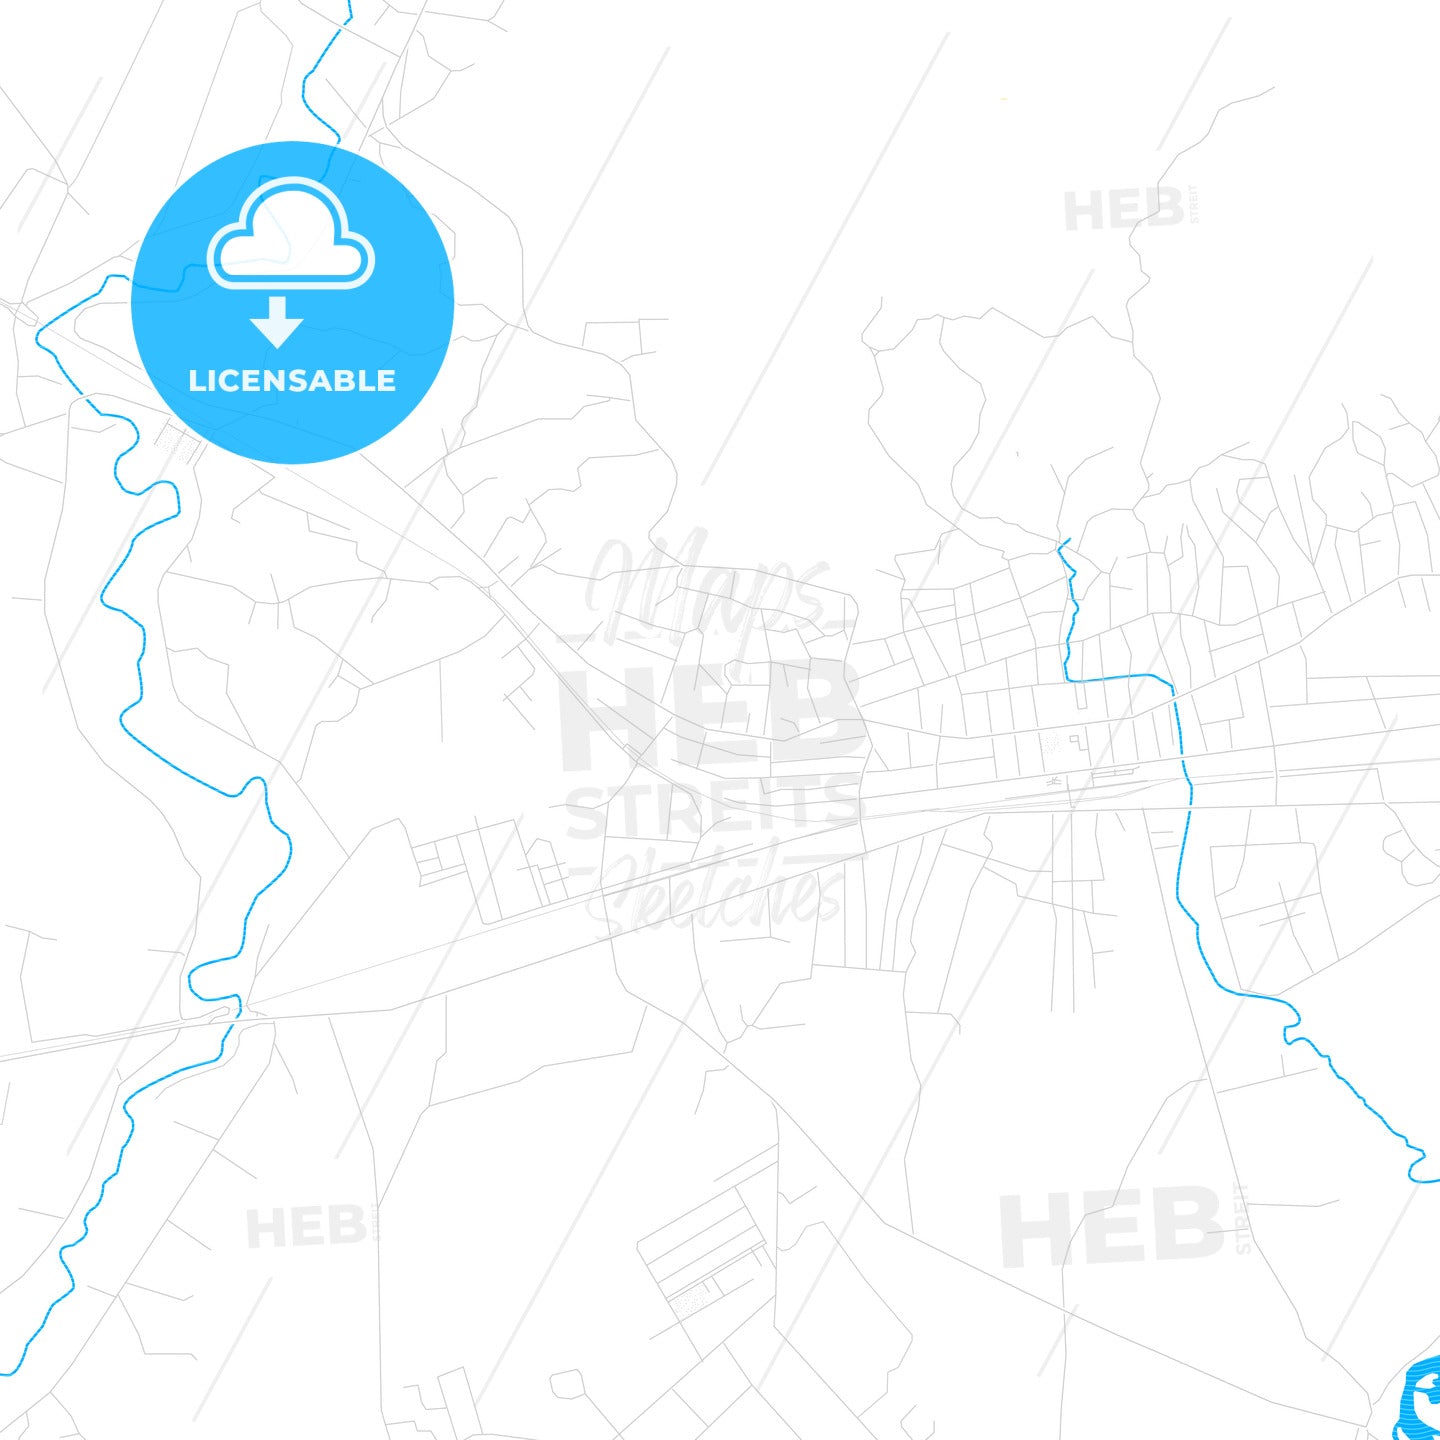 Senaki, Georgia PDF vector map with water in focus